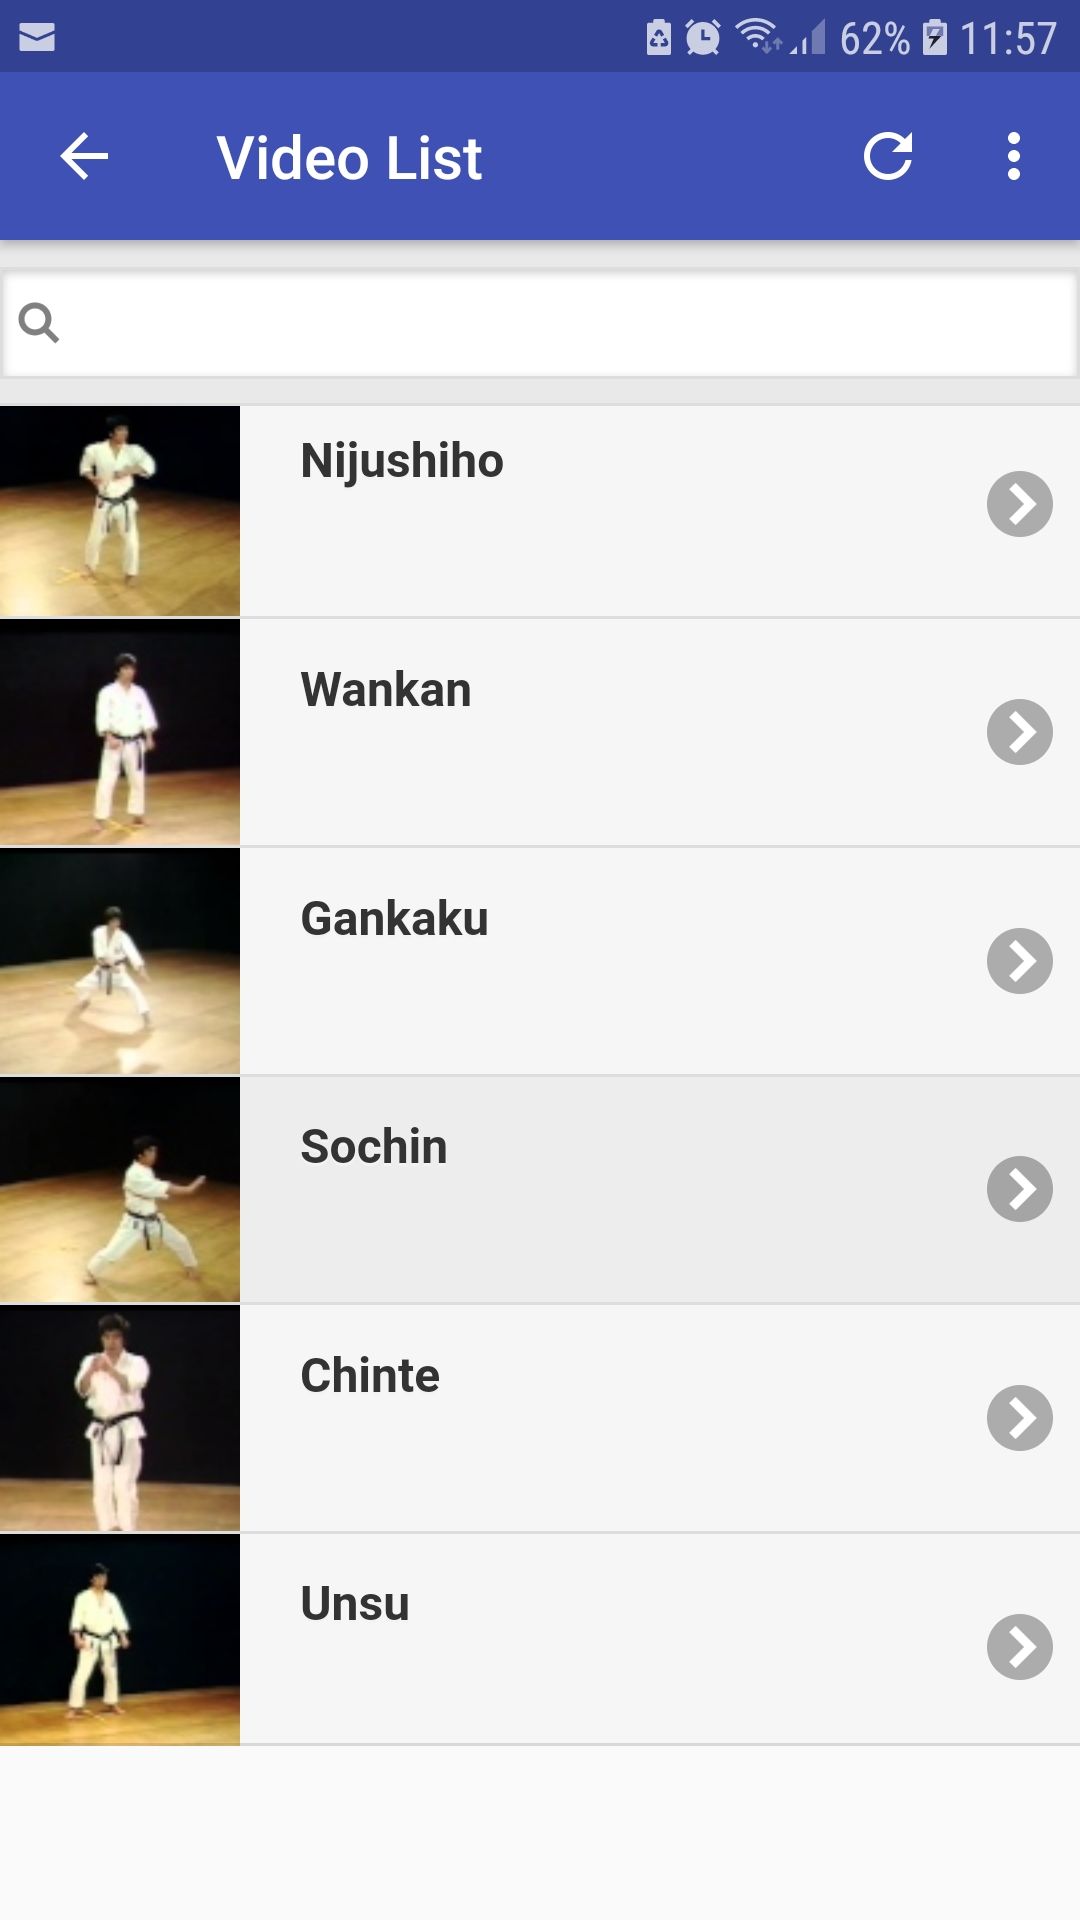 26 shotokan karate katas mobile app video list